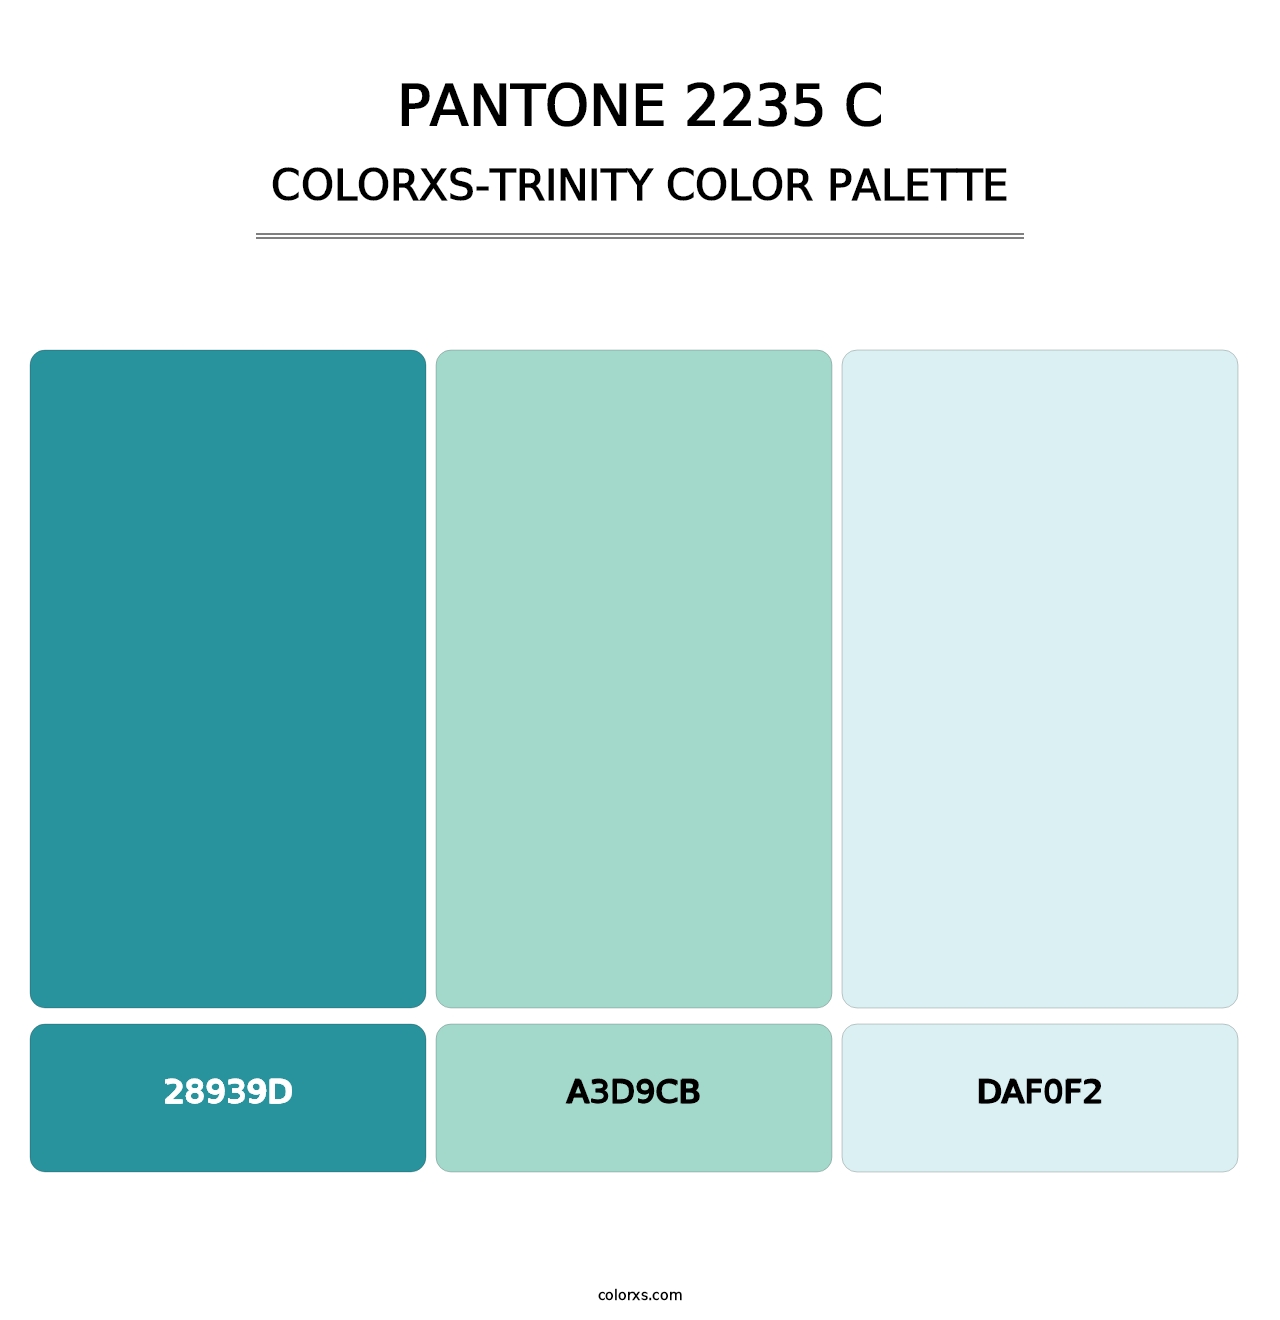 PANTONE 2235 C - Colorxs Trinity Palette